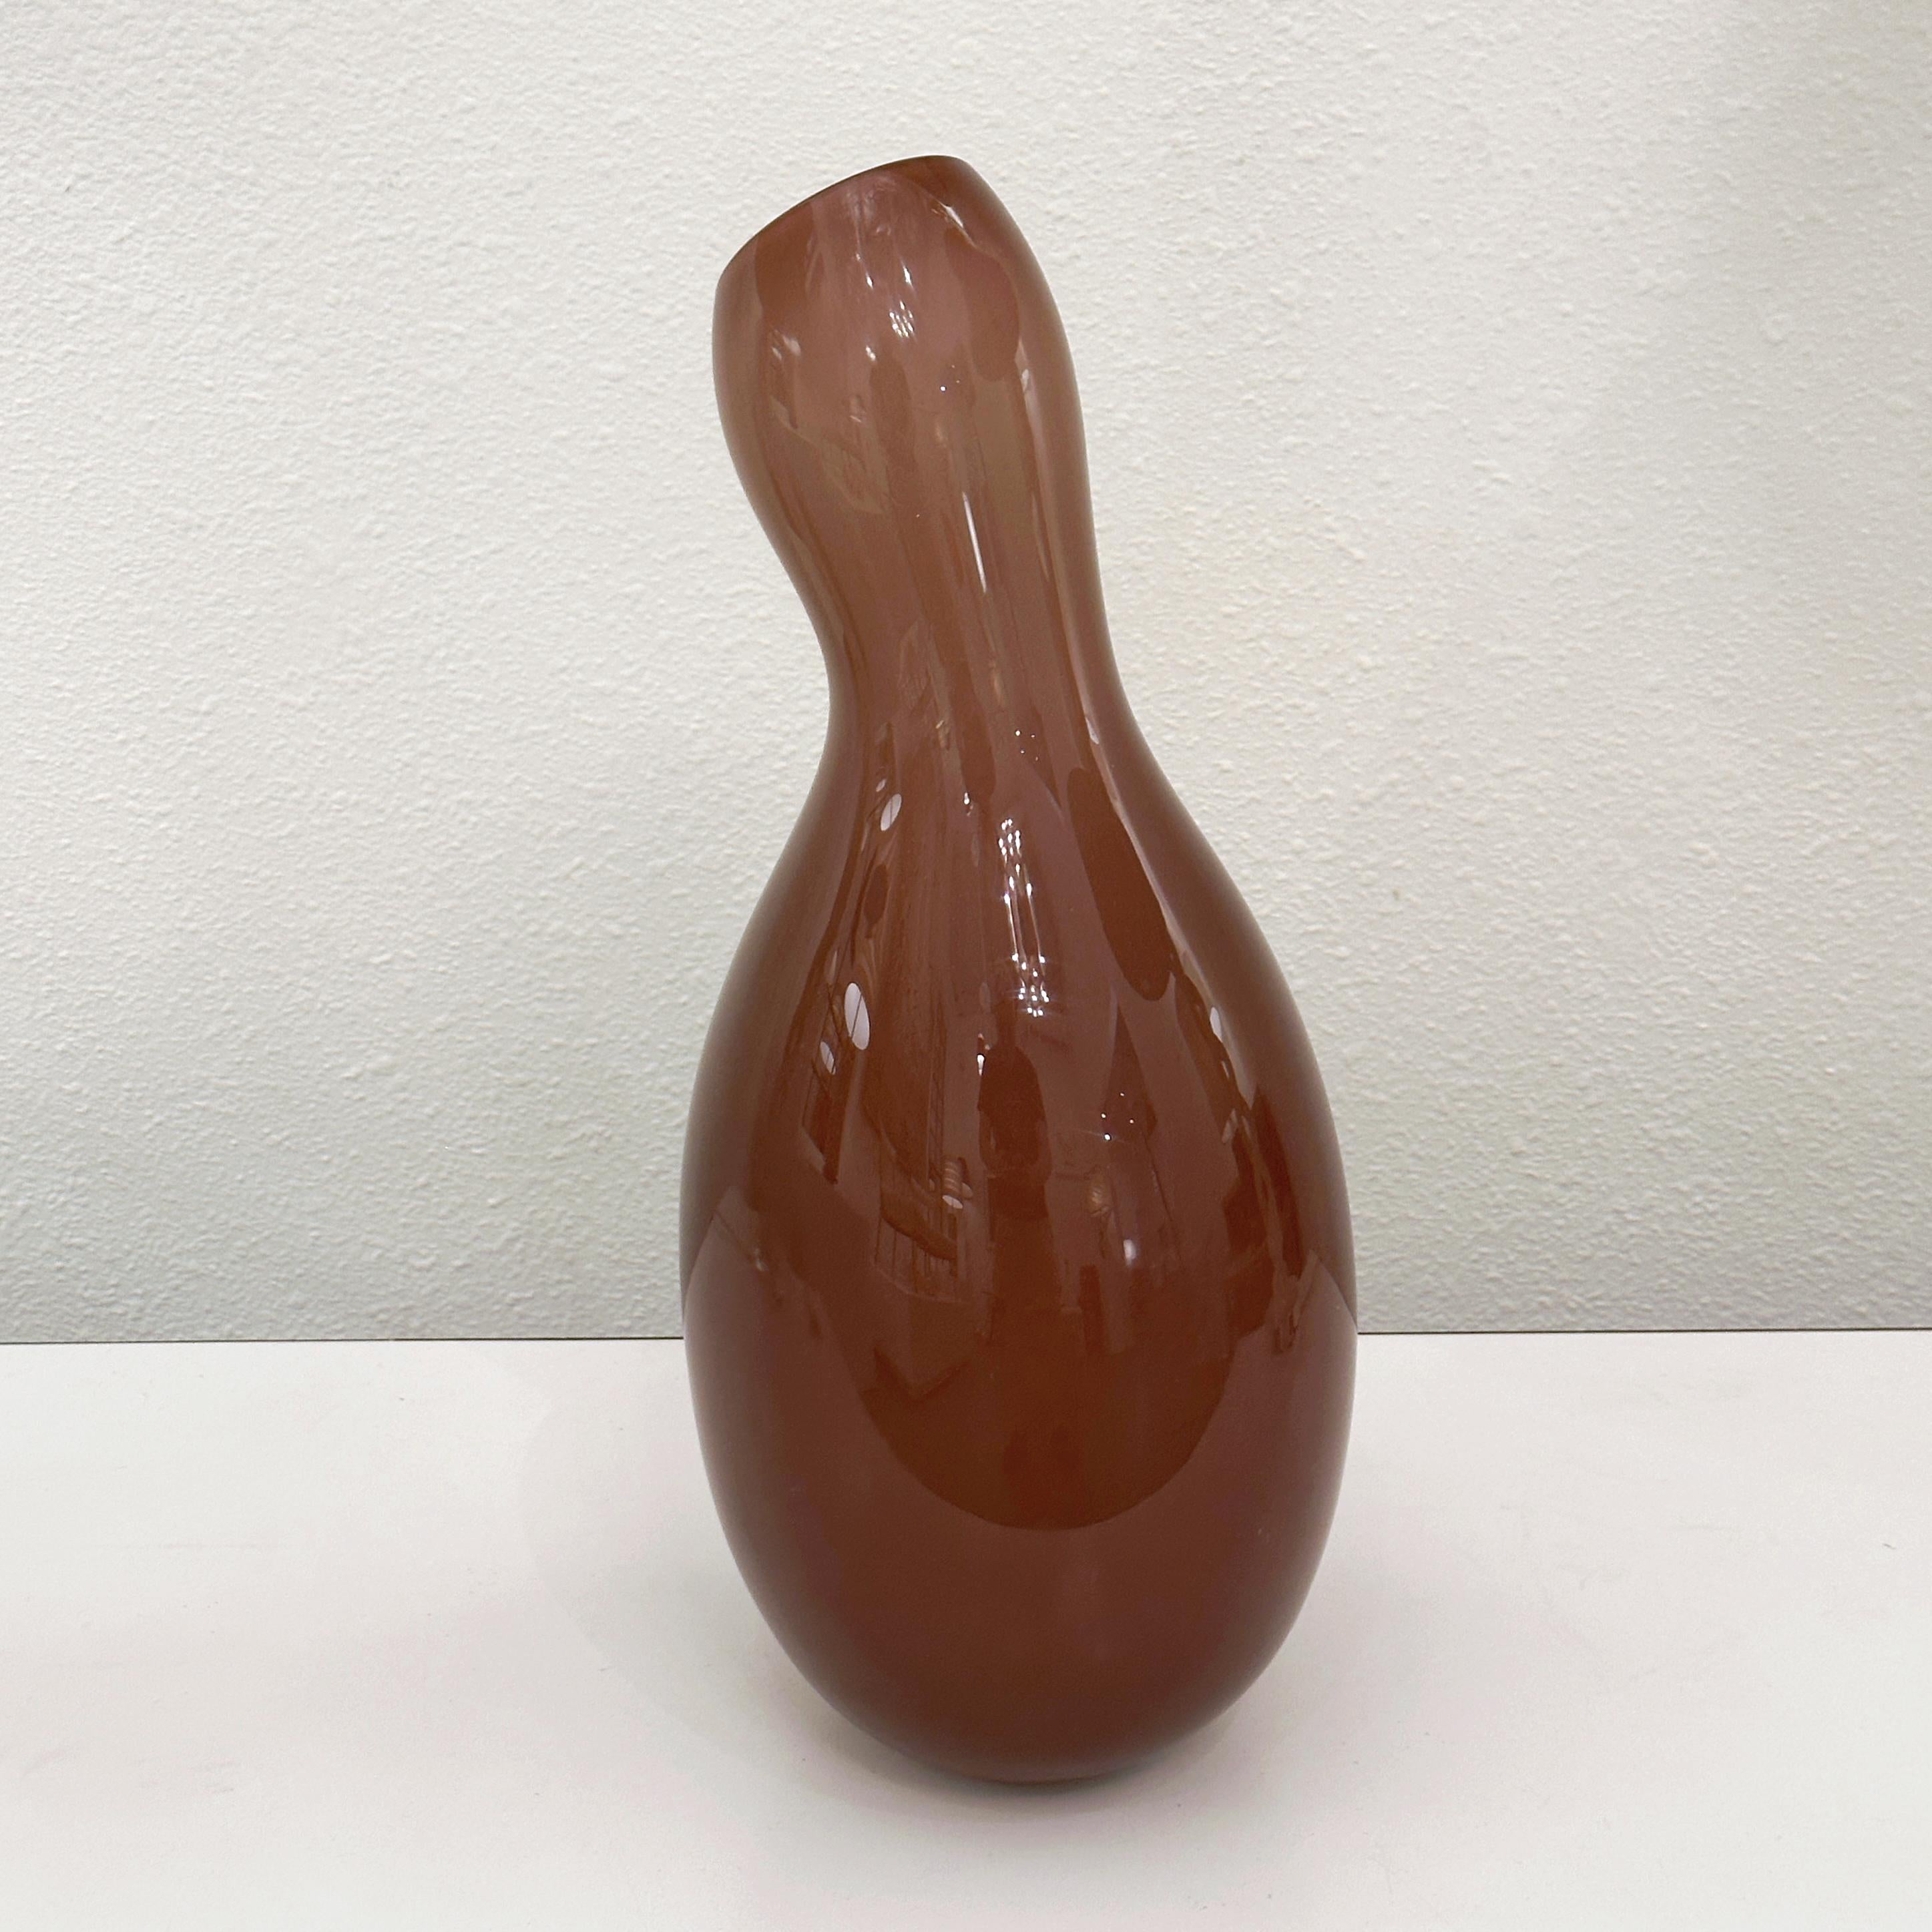 Art Glass Marre Moerel Anatomy Series Corpus Cavernosum Murano Glass Vase Covo, Italy For Sale